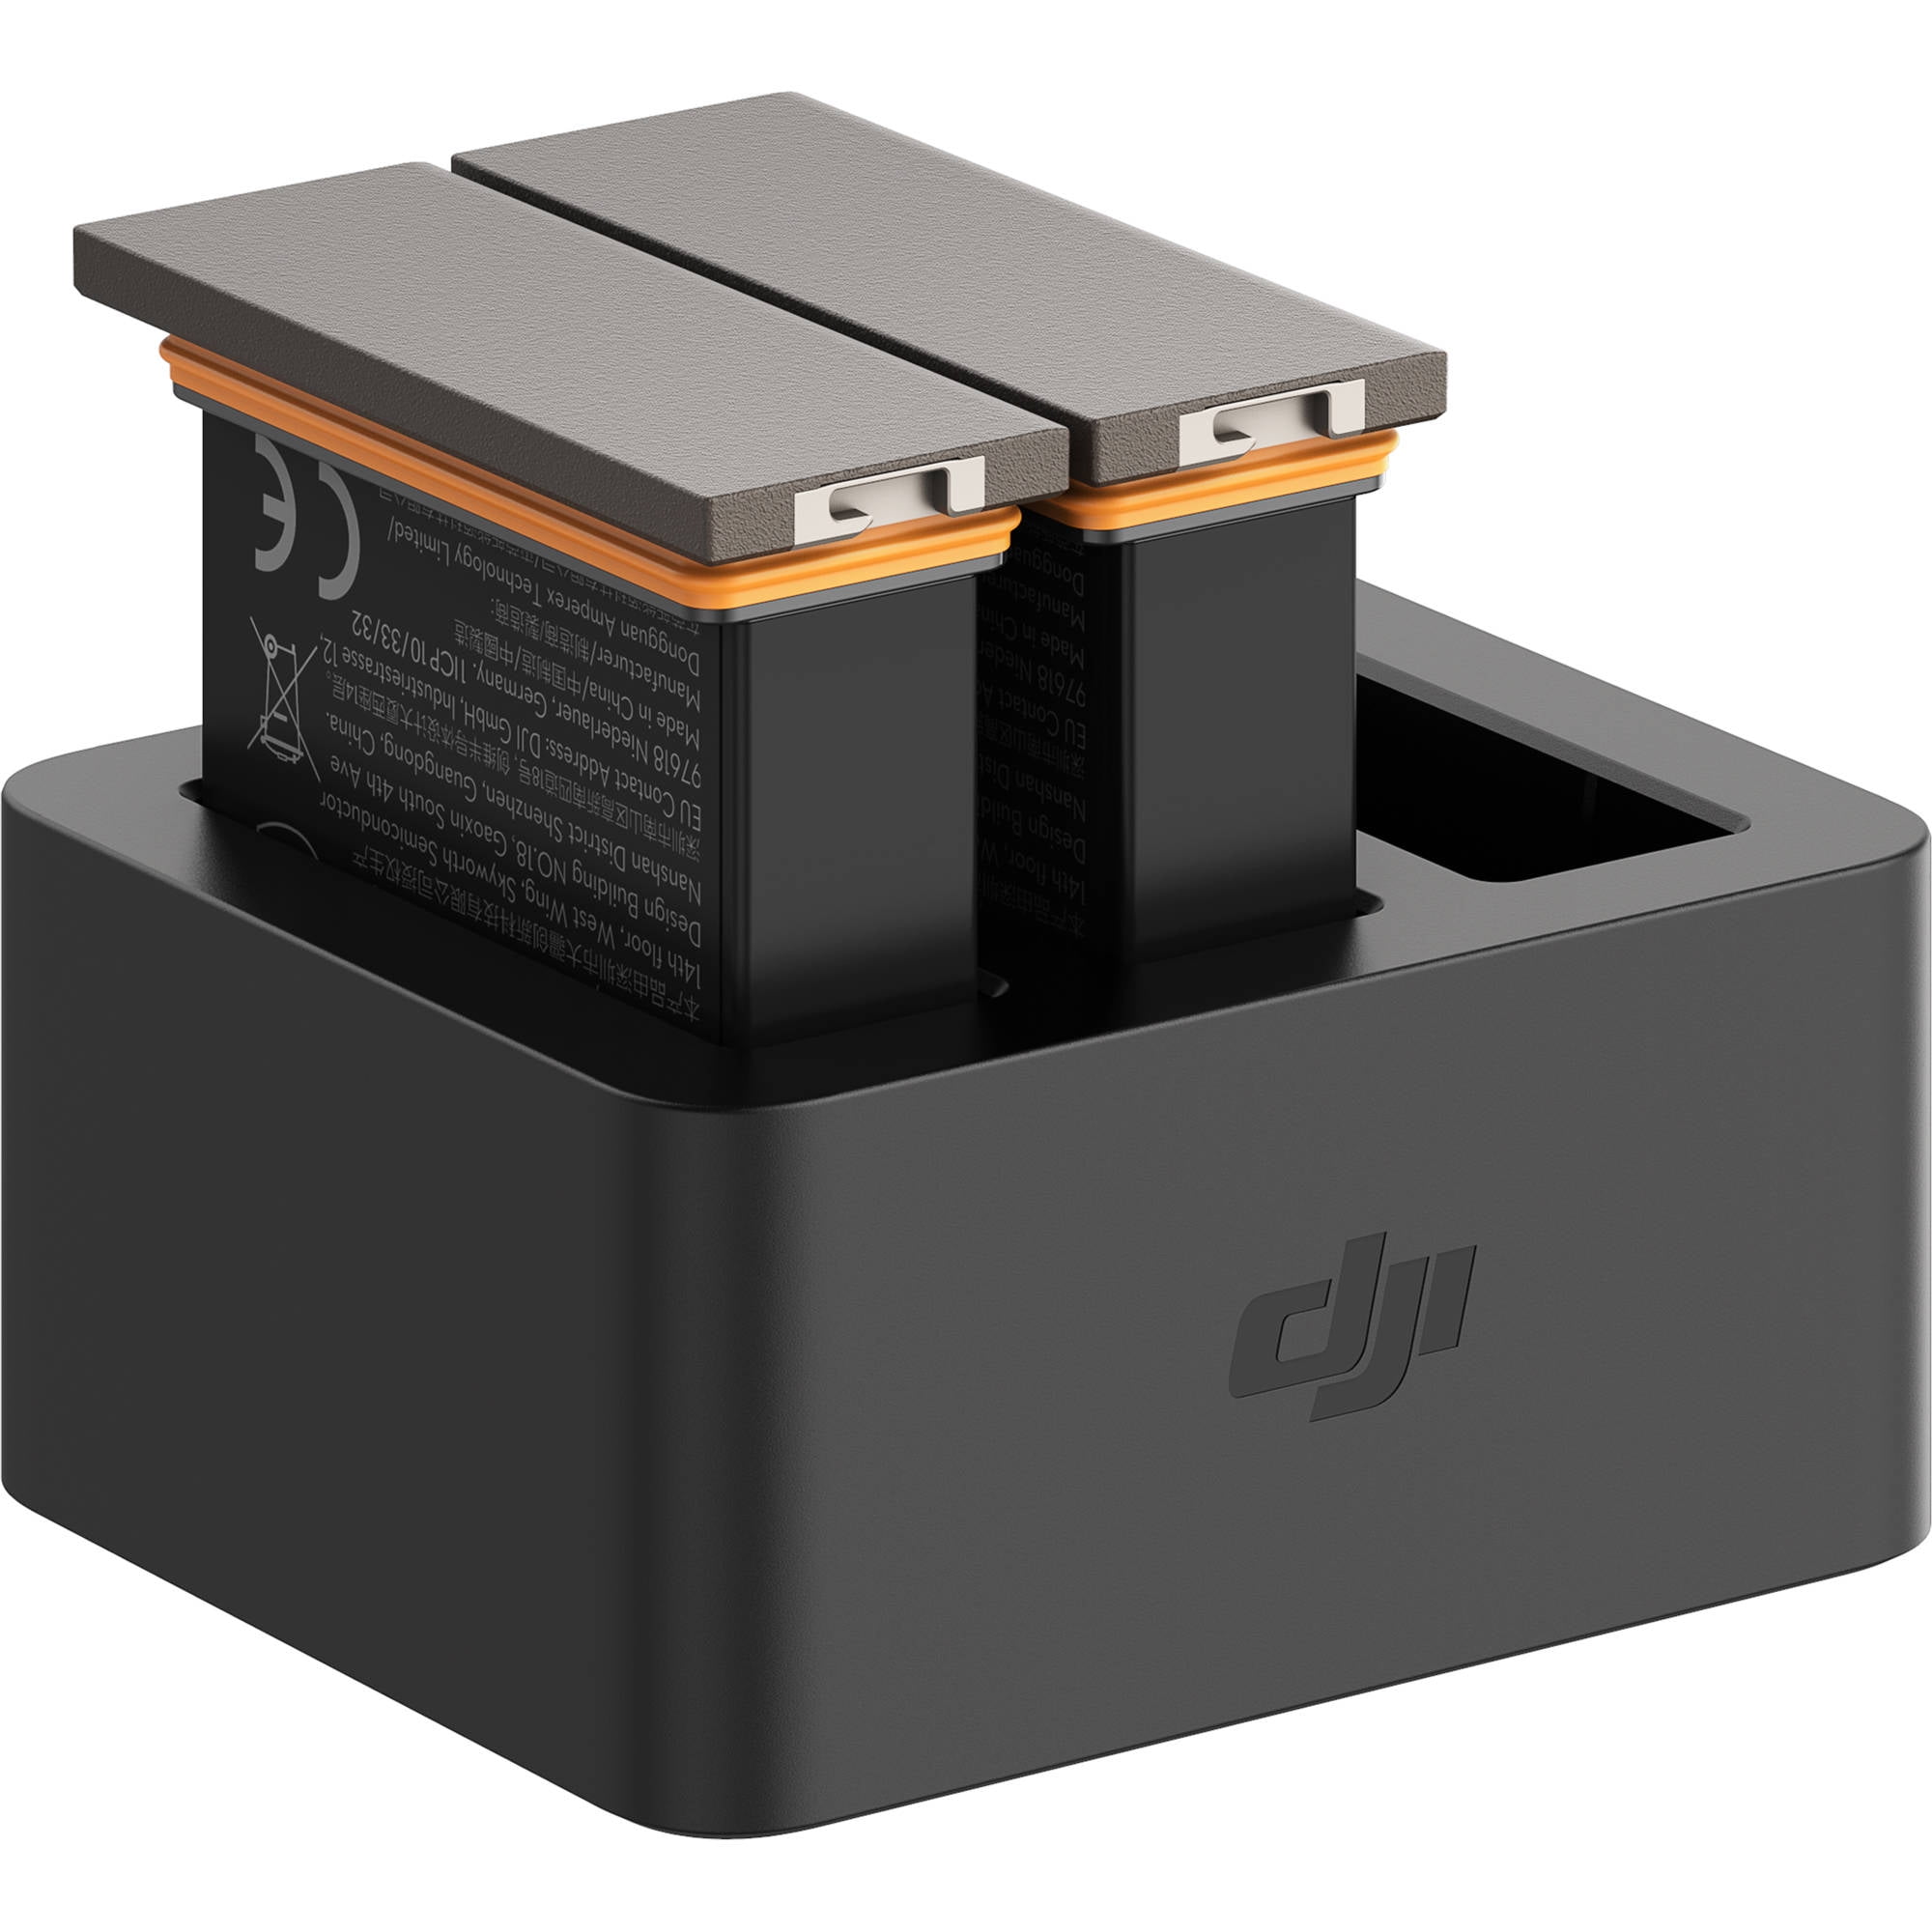 DJI DJI OSMO Part 10 Intelligent Battery Charger 